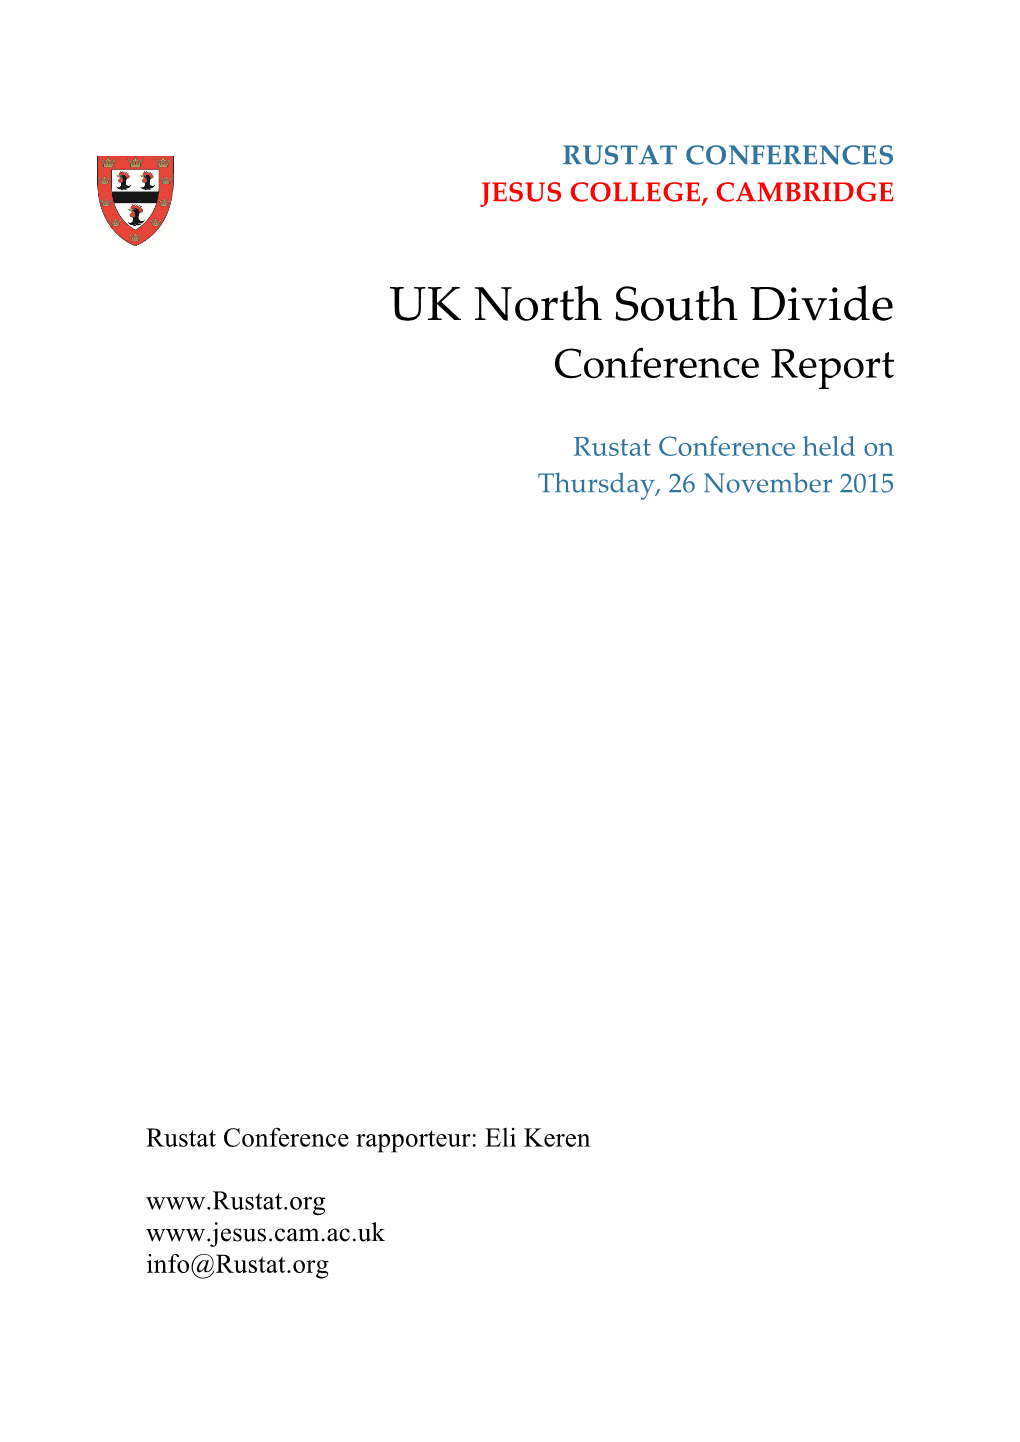 Download Rustat Conference UK North South Divide 0.Pdf